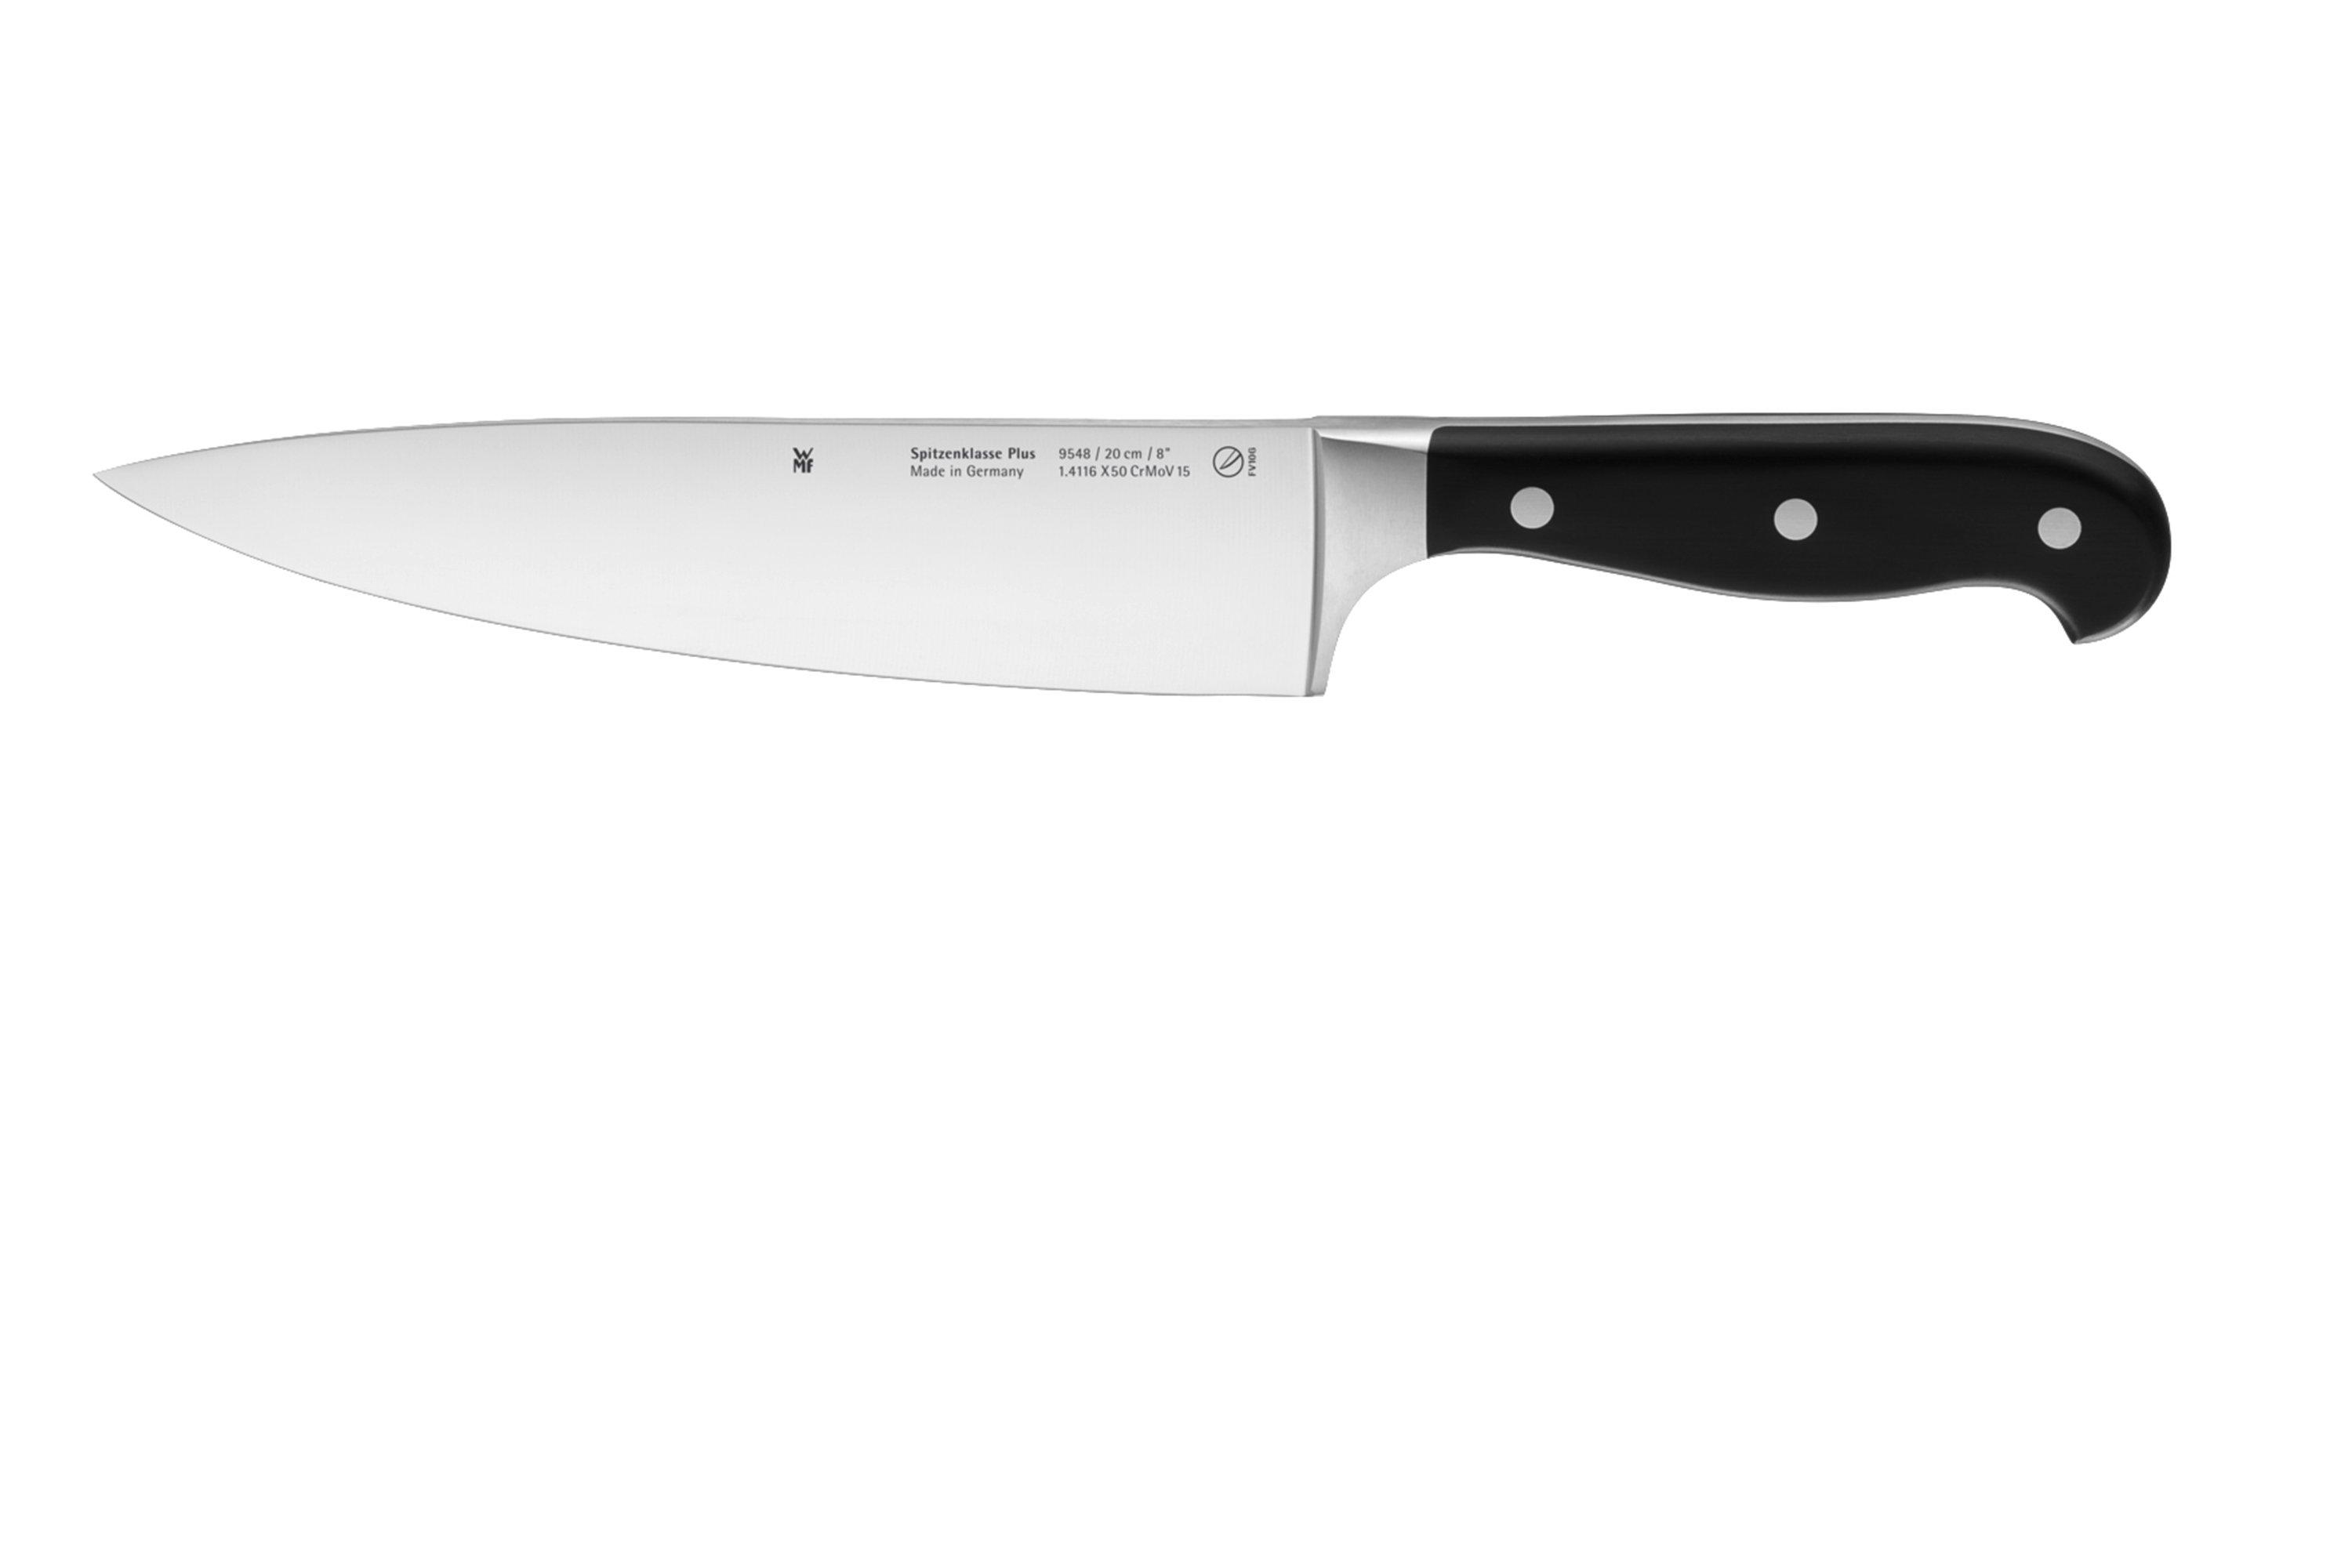 wonder Labe vocaal WMF Spitzenklasse Plus 1895486032 chef's knife, 20 cm | Advantageously  shopping at Knivesandtools.com